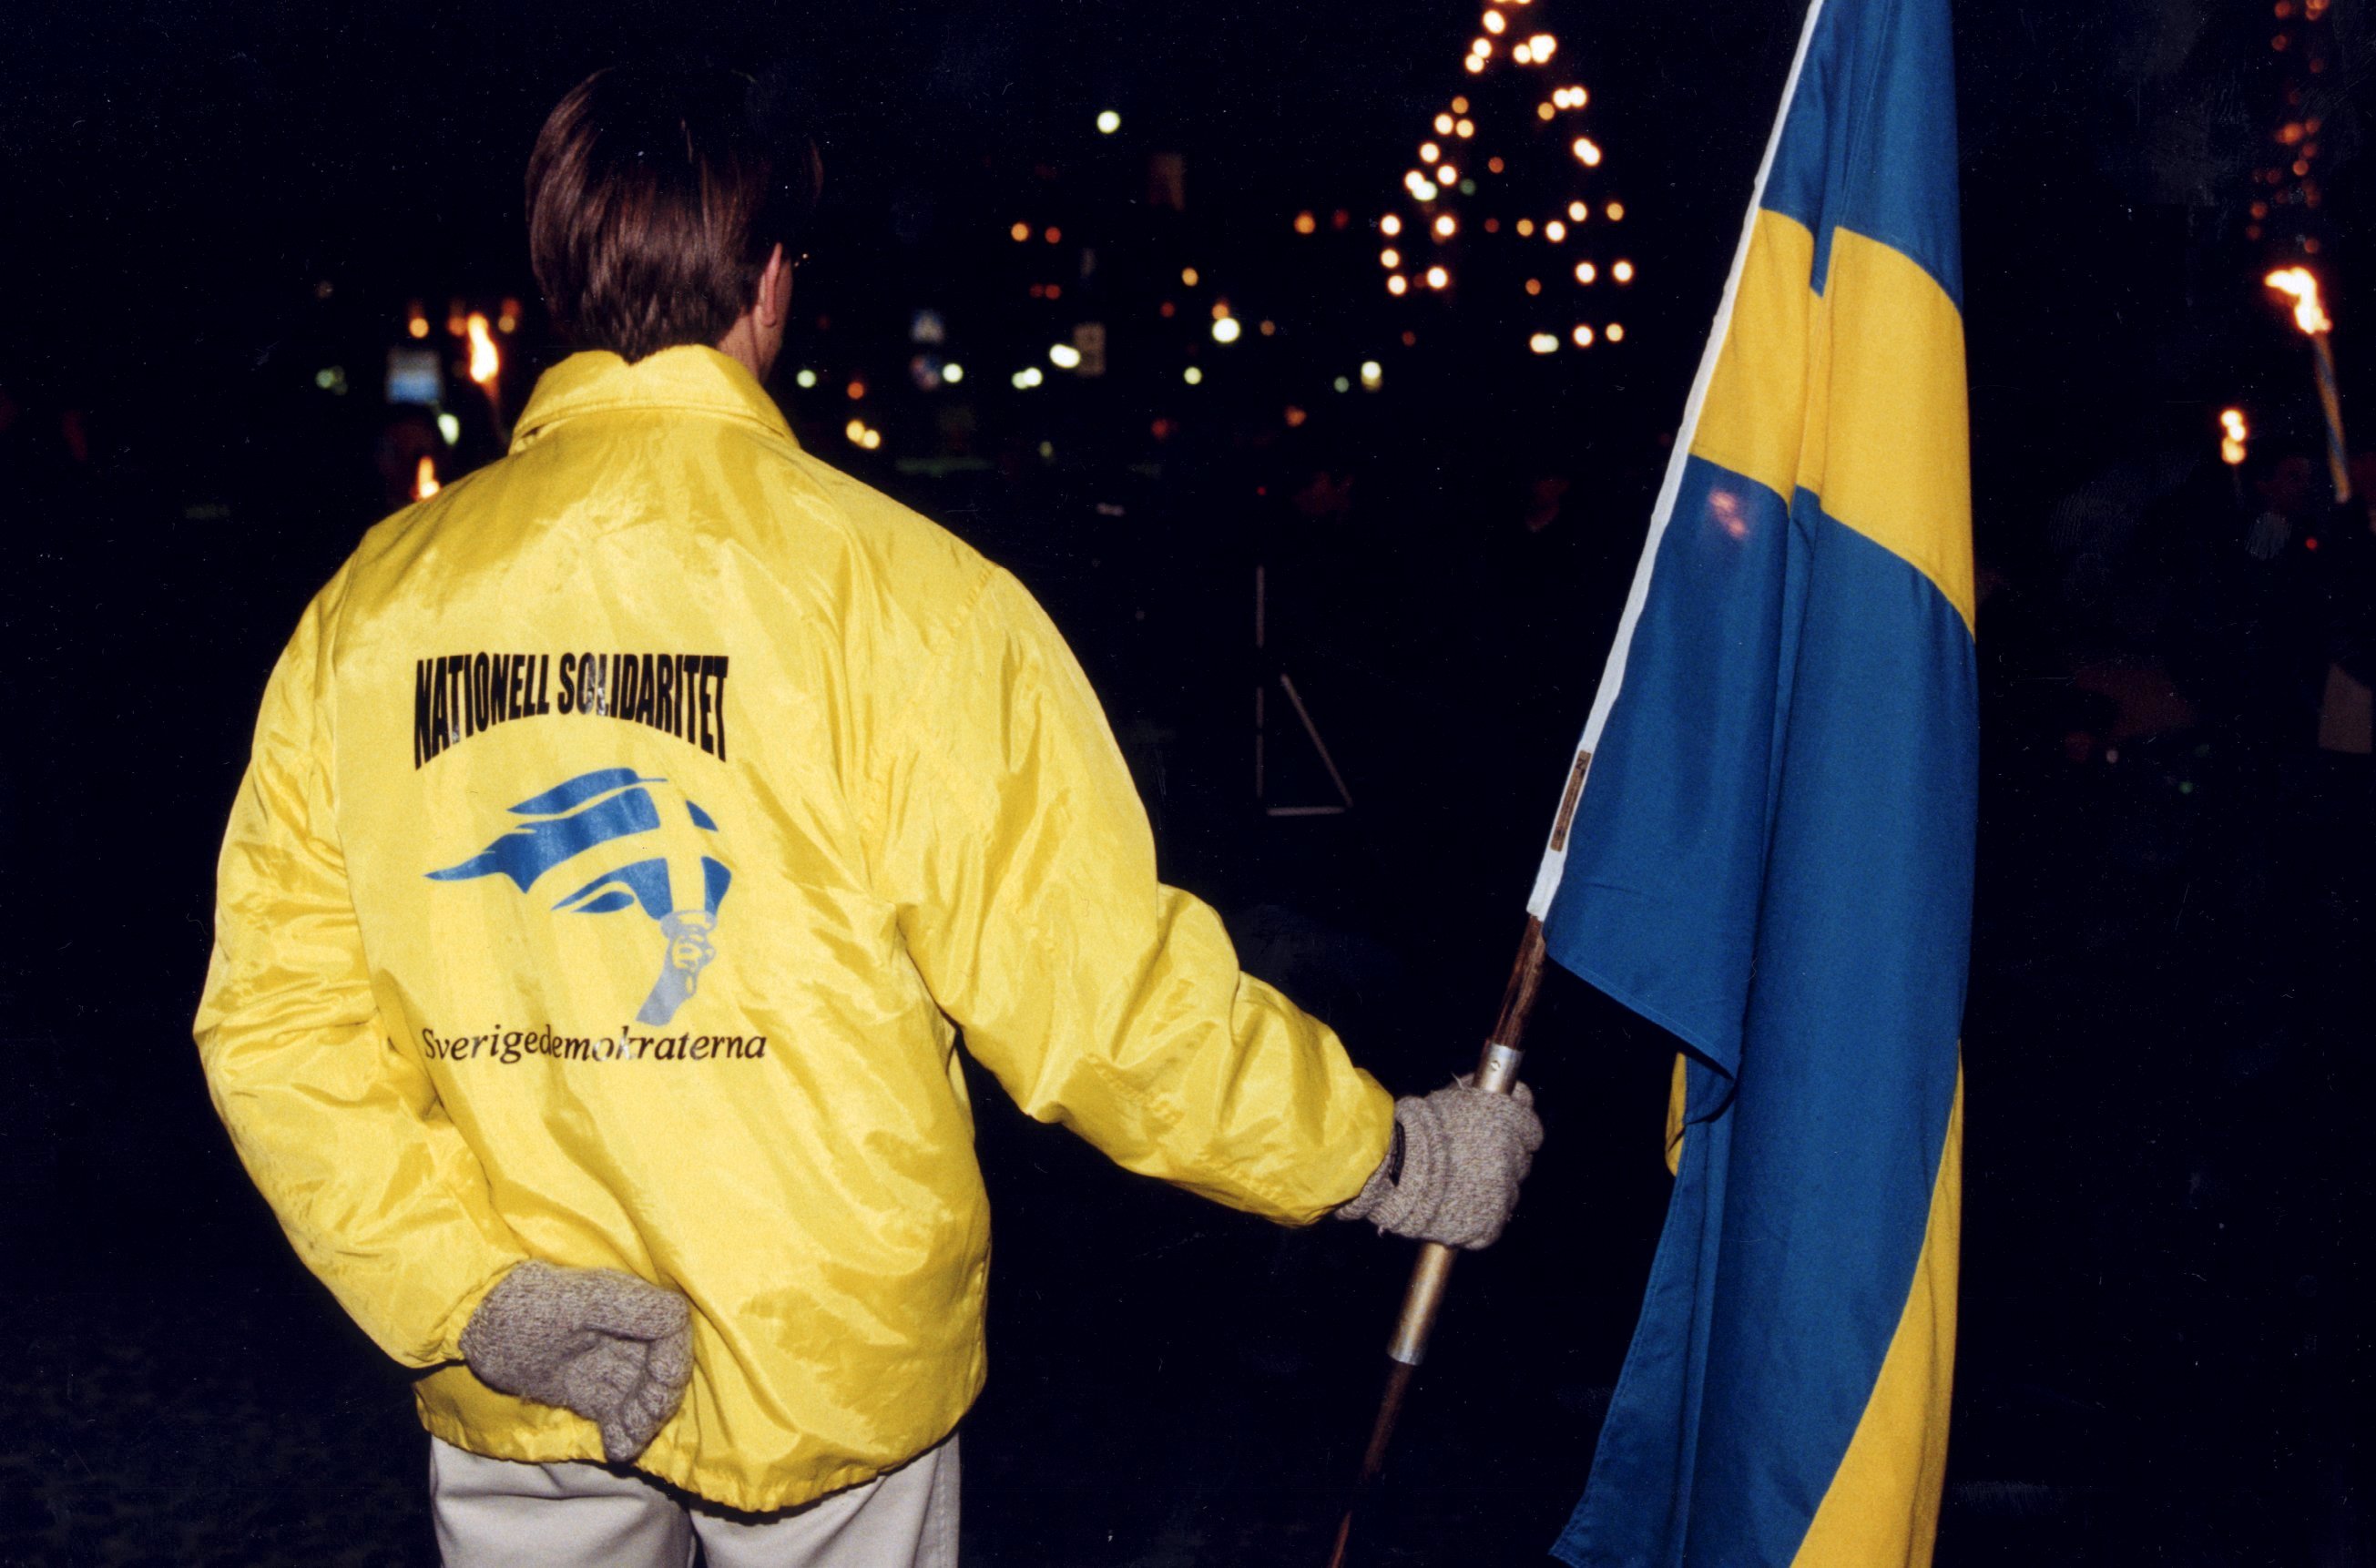 Stureplan, Riksdagsvalet 2010, Sverigedemokraterna, gatuvåld